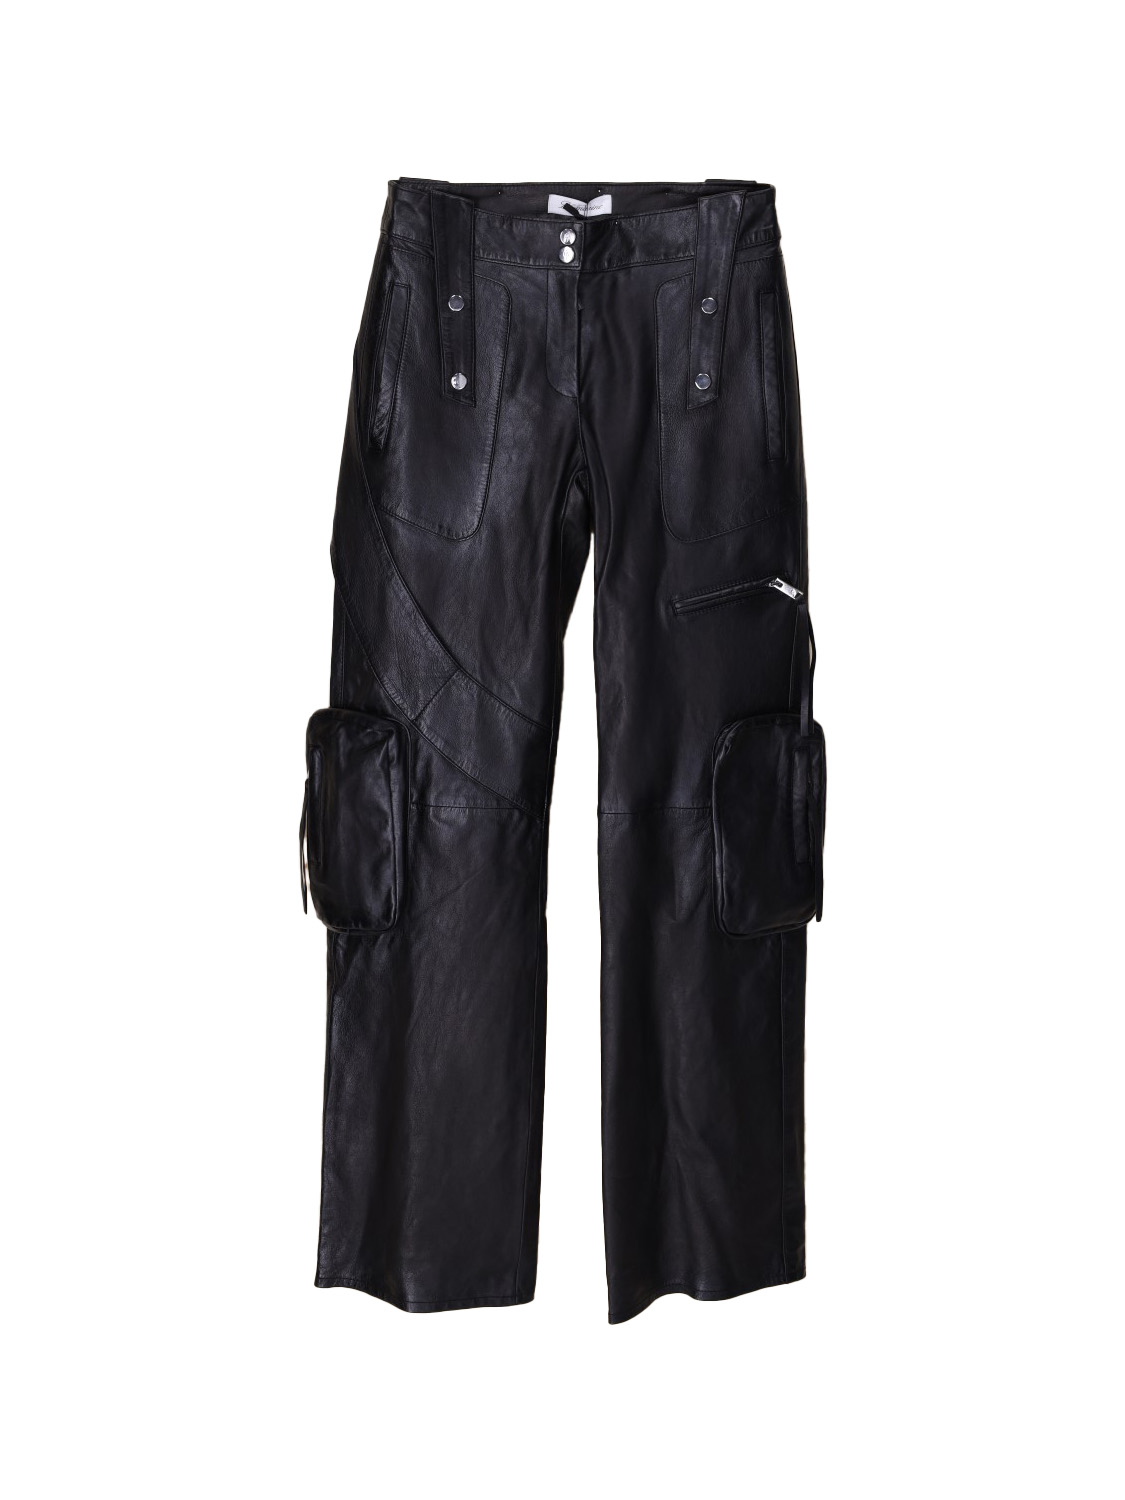 Blumarine Pantalone Pelle - leather pants with biker details  black 34